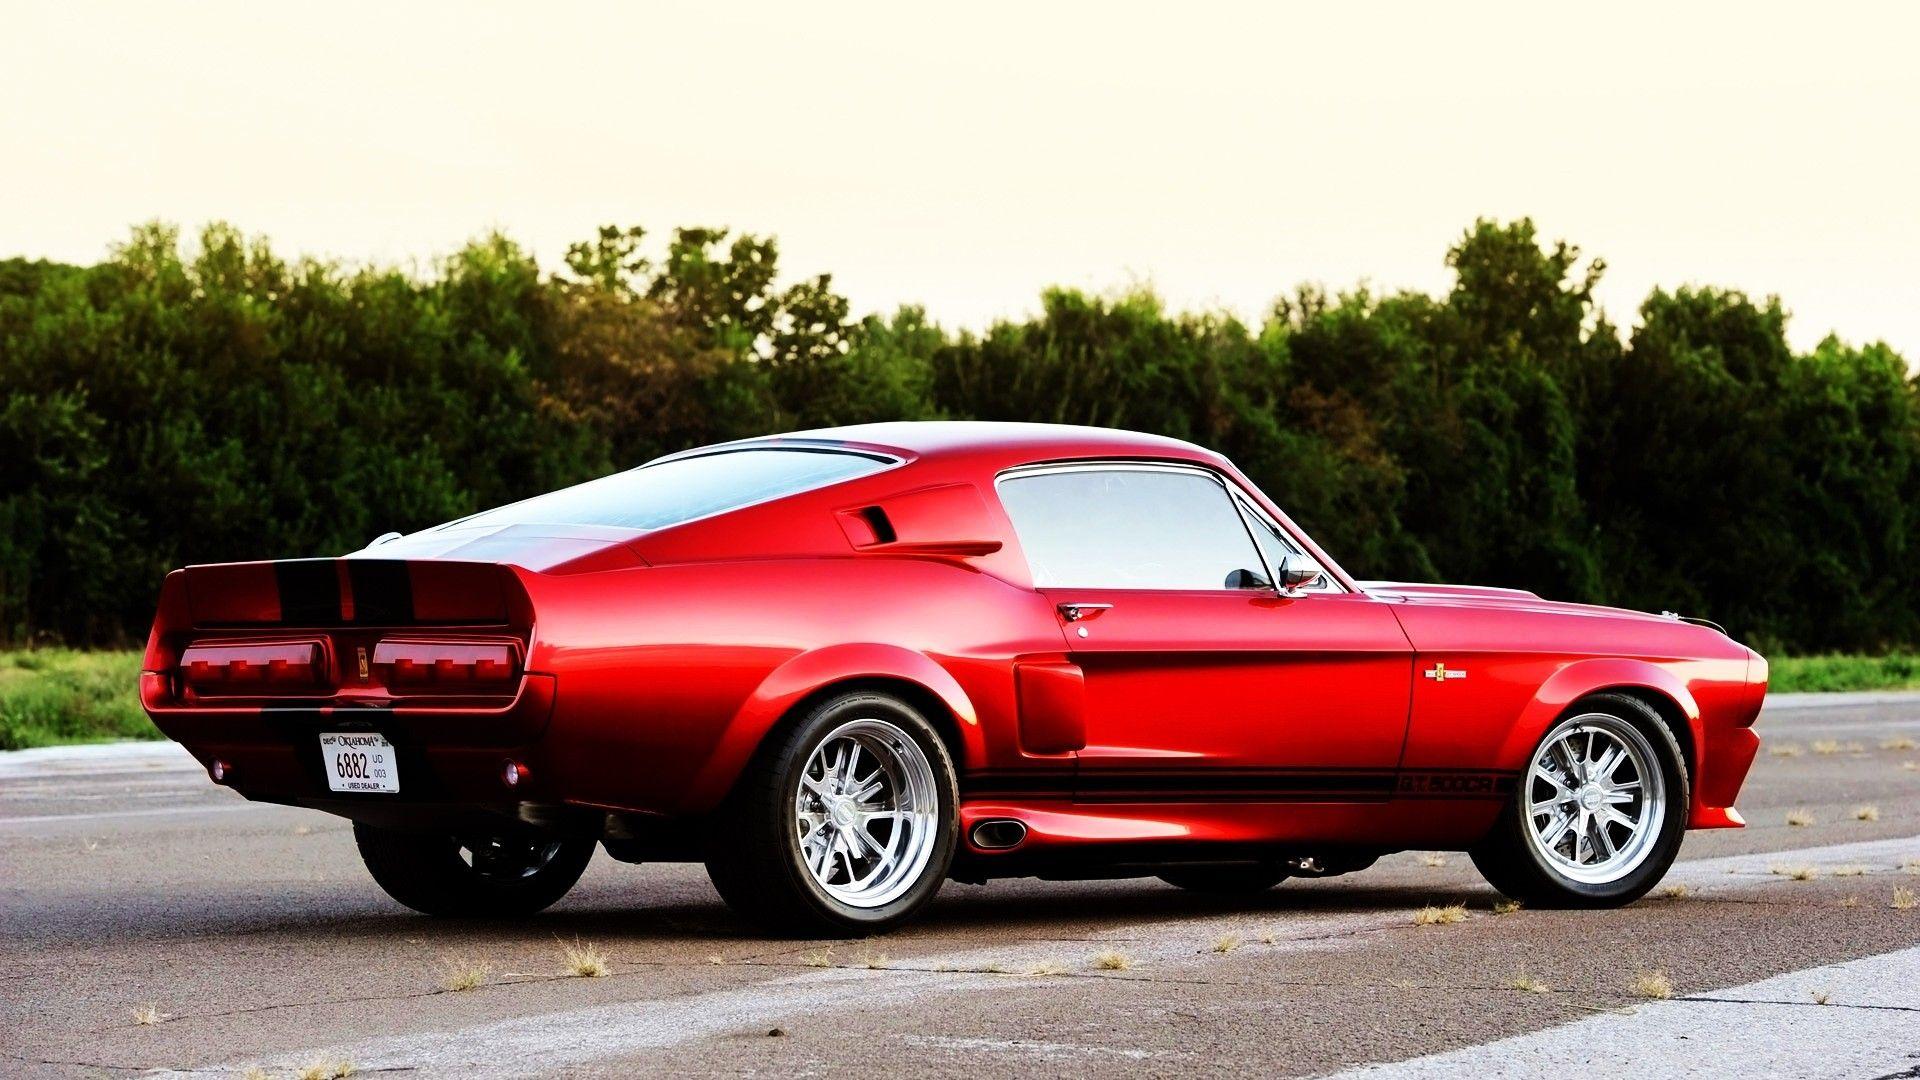 Red Classic Mustang Wallpaper · iBackgroundWallpaper